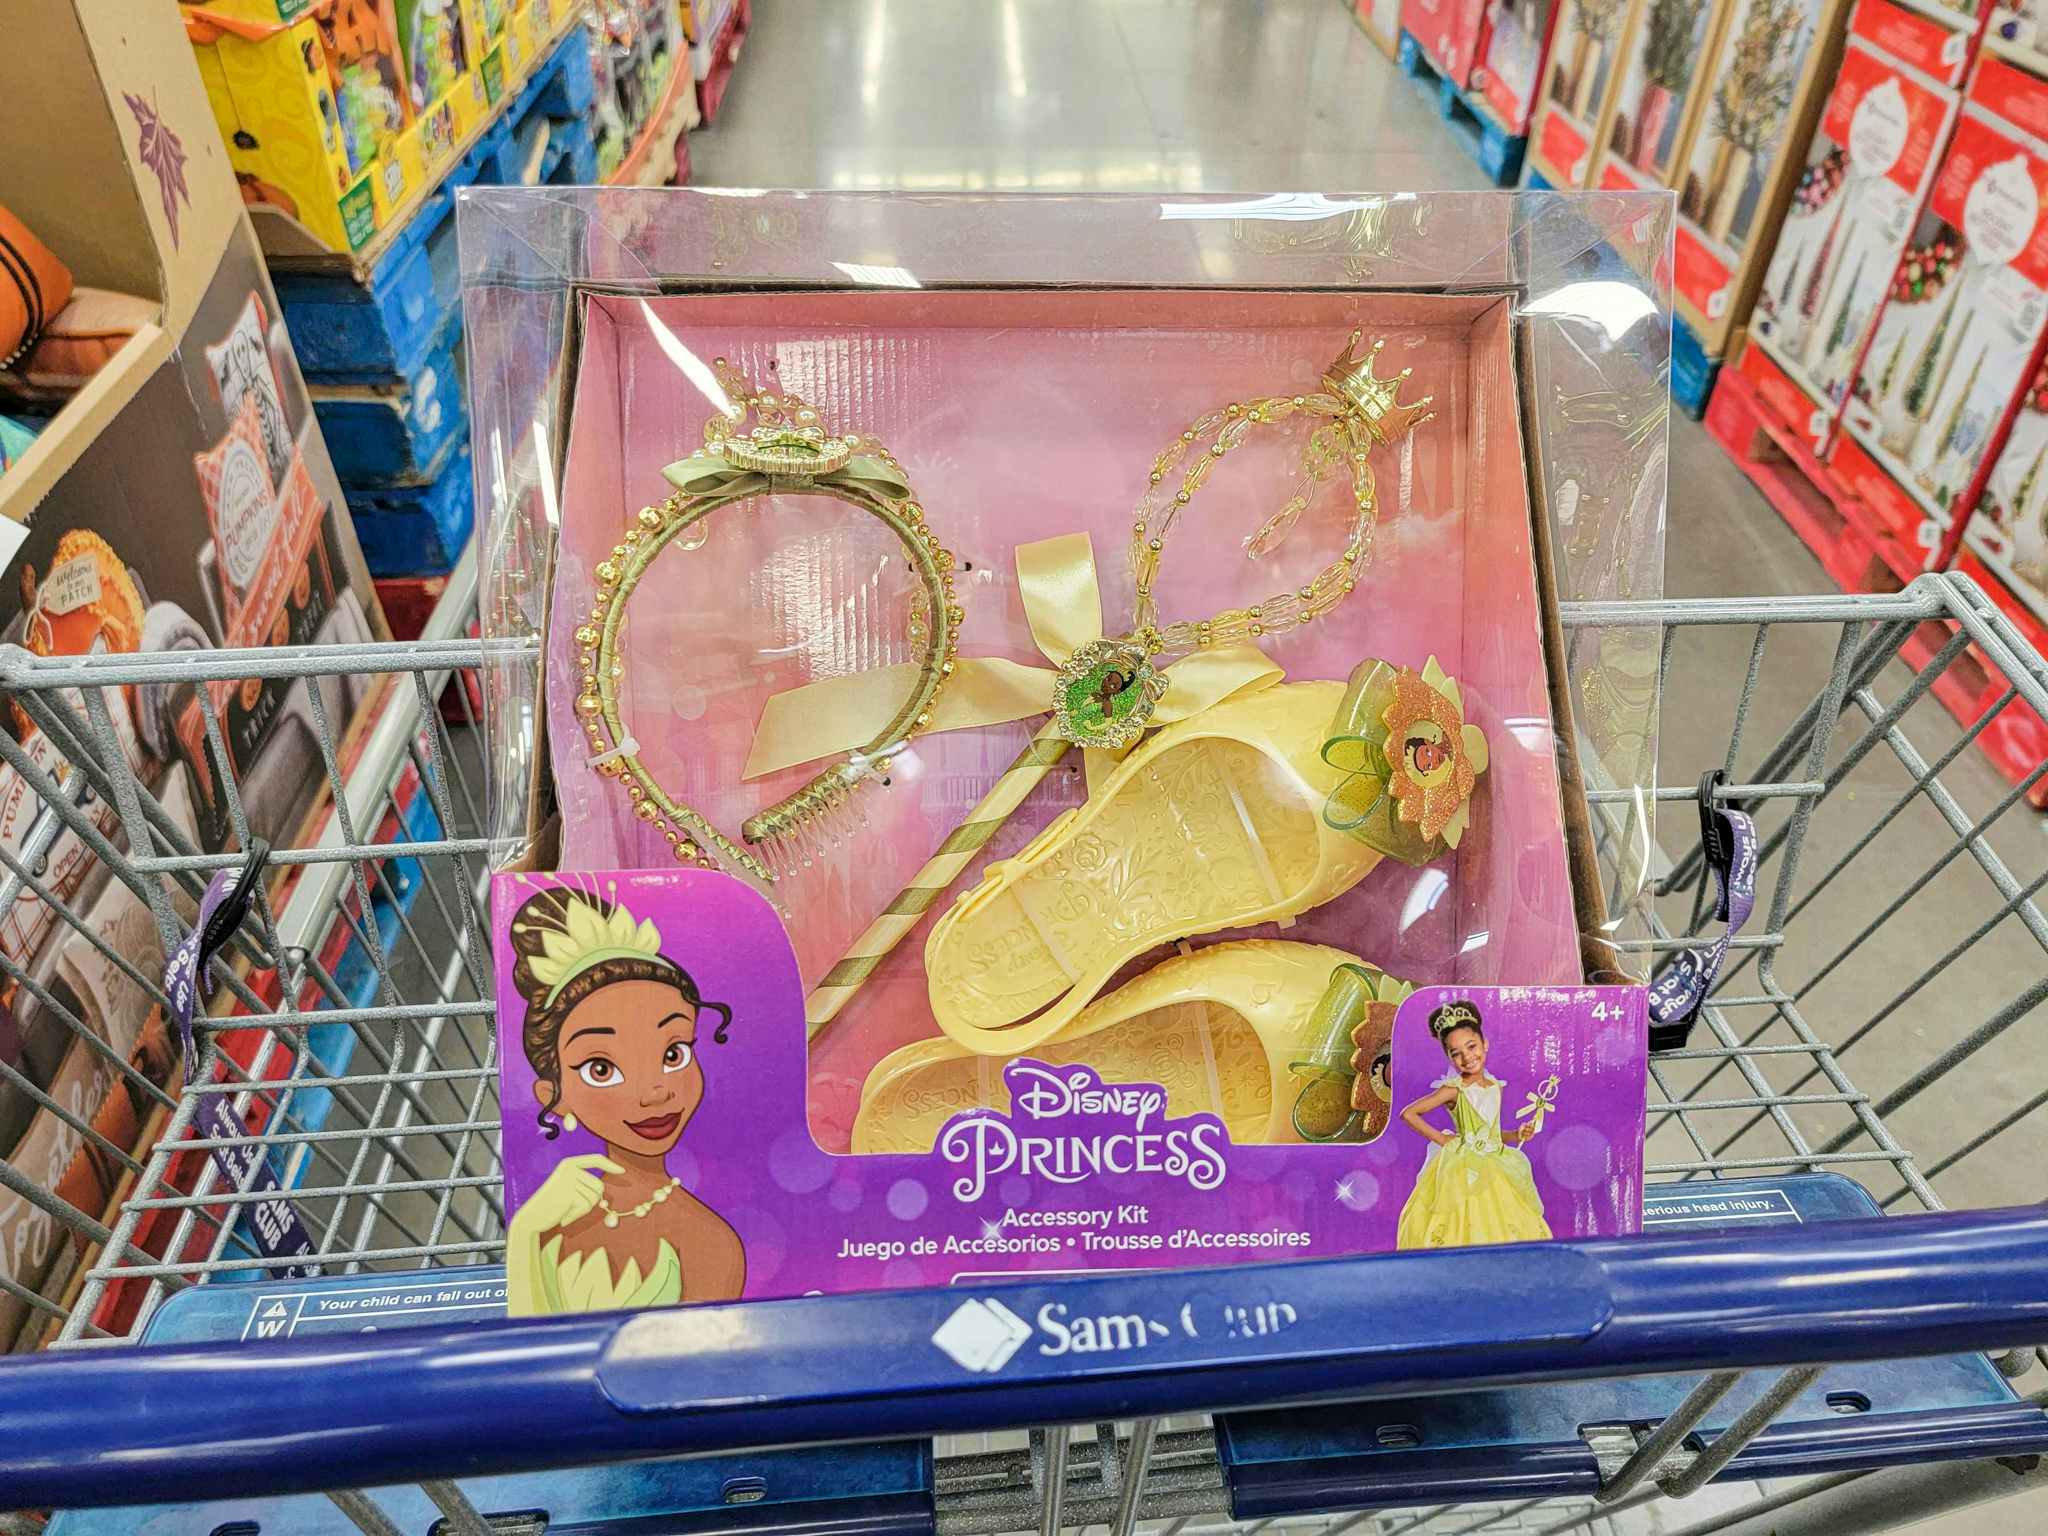 a tiana disney princess accessory set in a cart